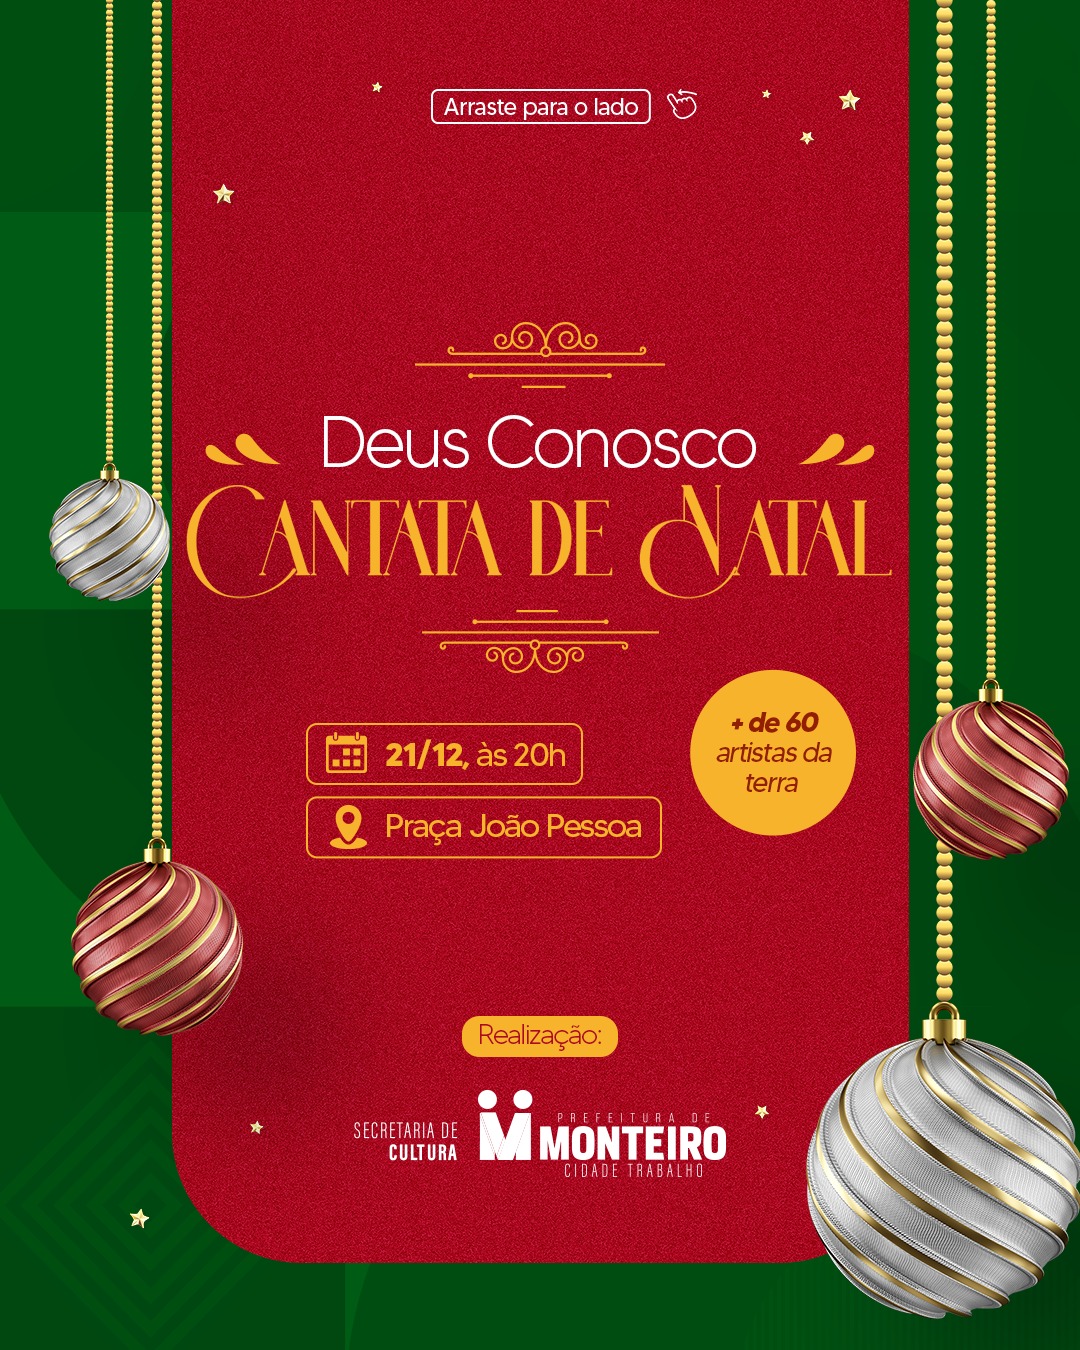 DEUS CONOSCO: Monteiro realiza Cantata de Natal com artistas da terra nesta quinta-feira 